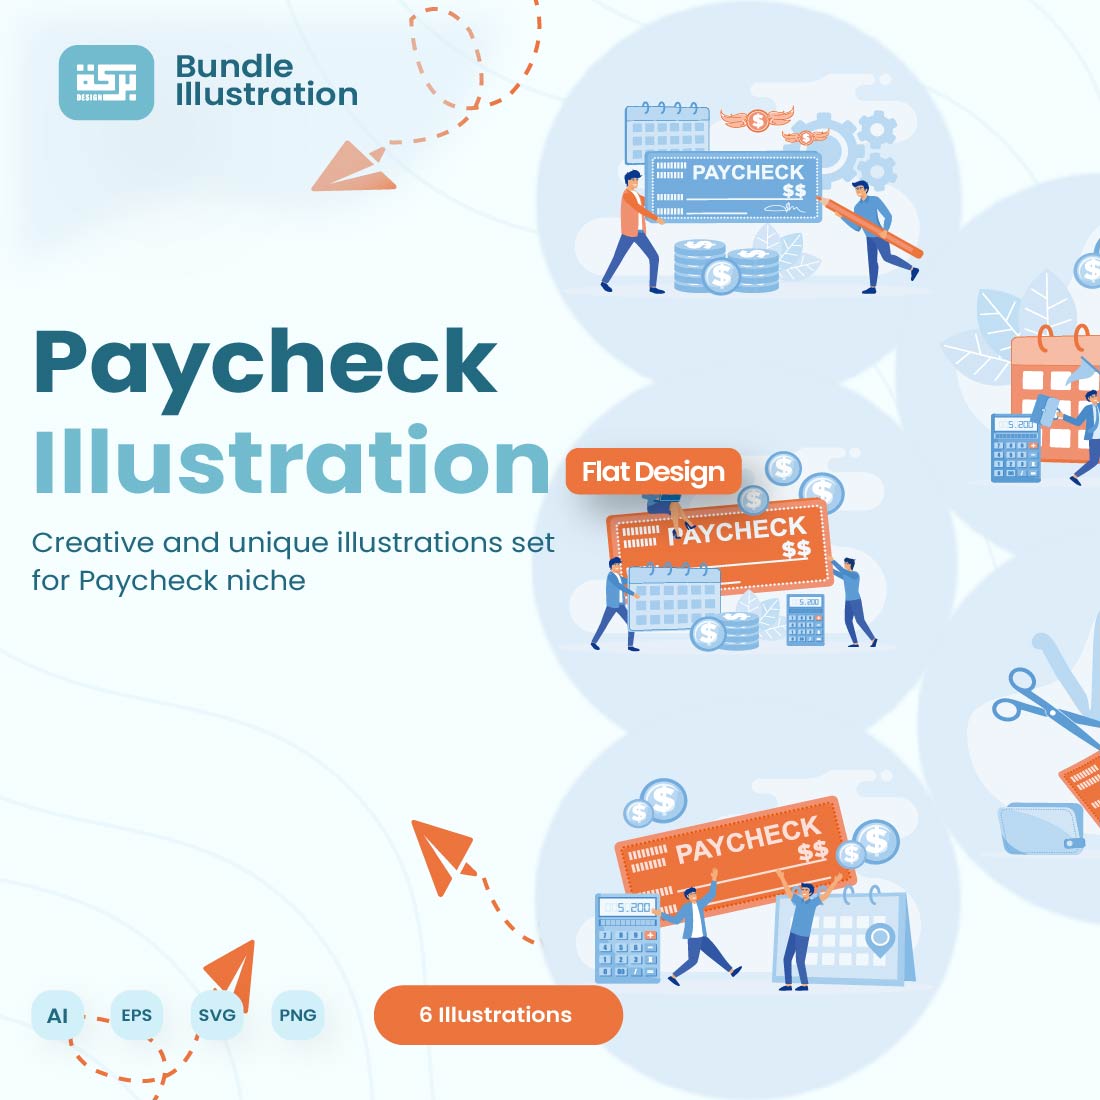 Illustration Design Paycheck cover image.